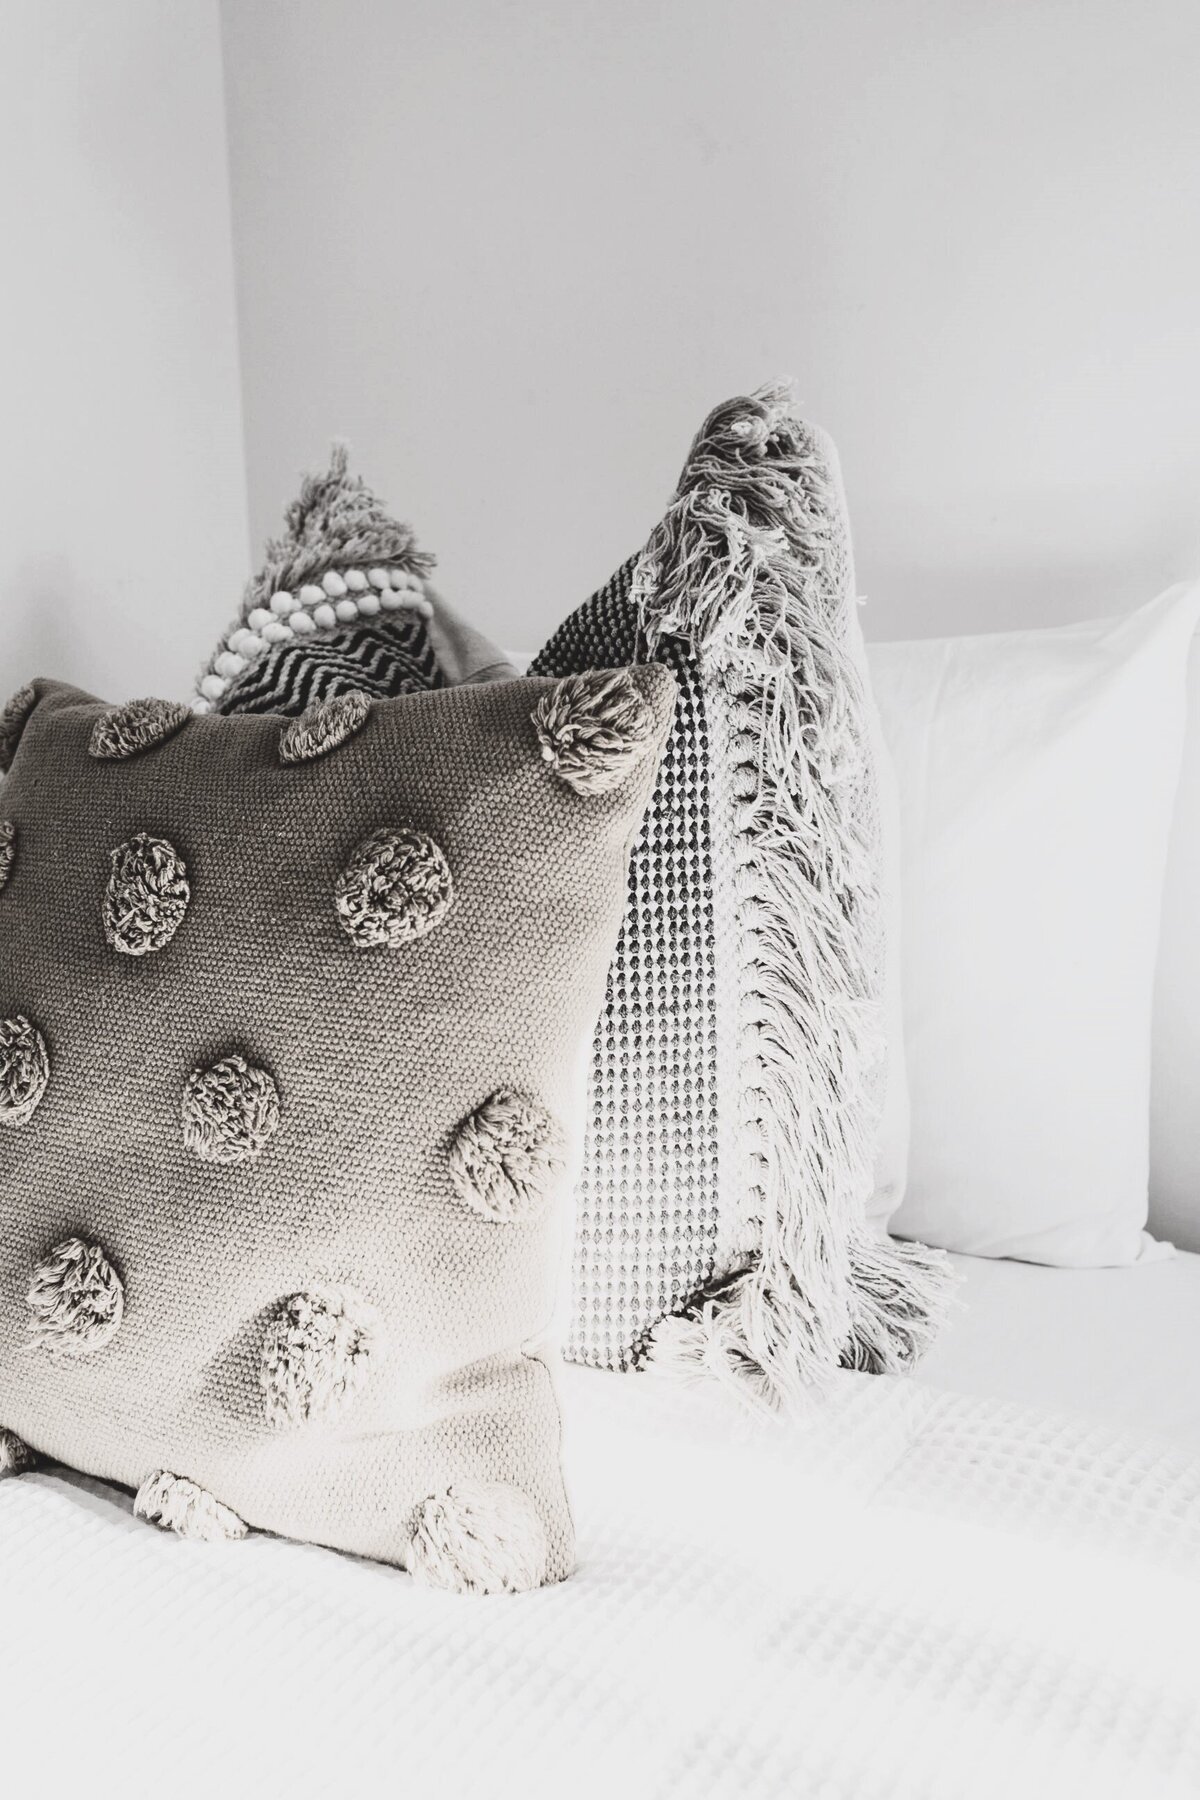 A set of textured throw pillows.